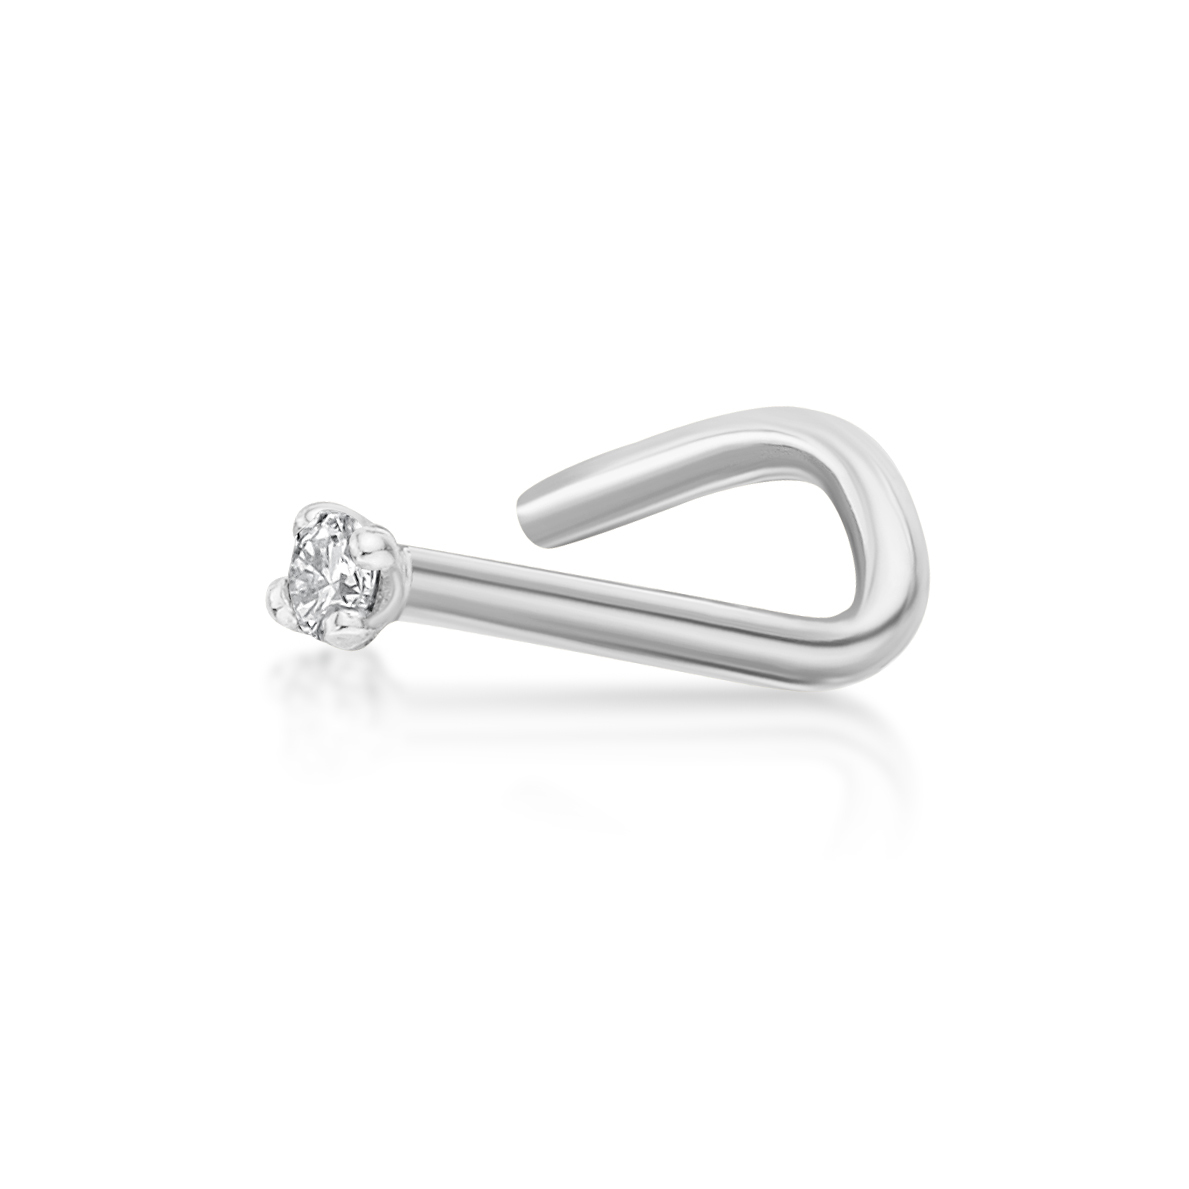 49892-nose-ring-the-piercer-white-gold-white-diamonds-0-01-h-i2-i3-49892-5.jpg